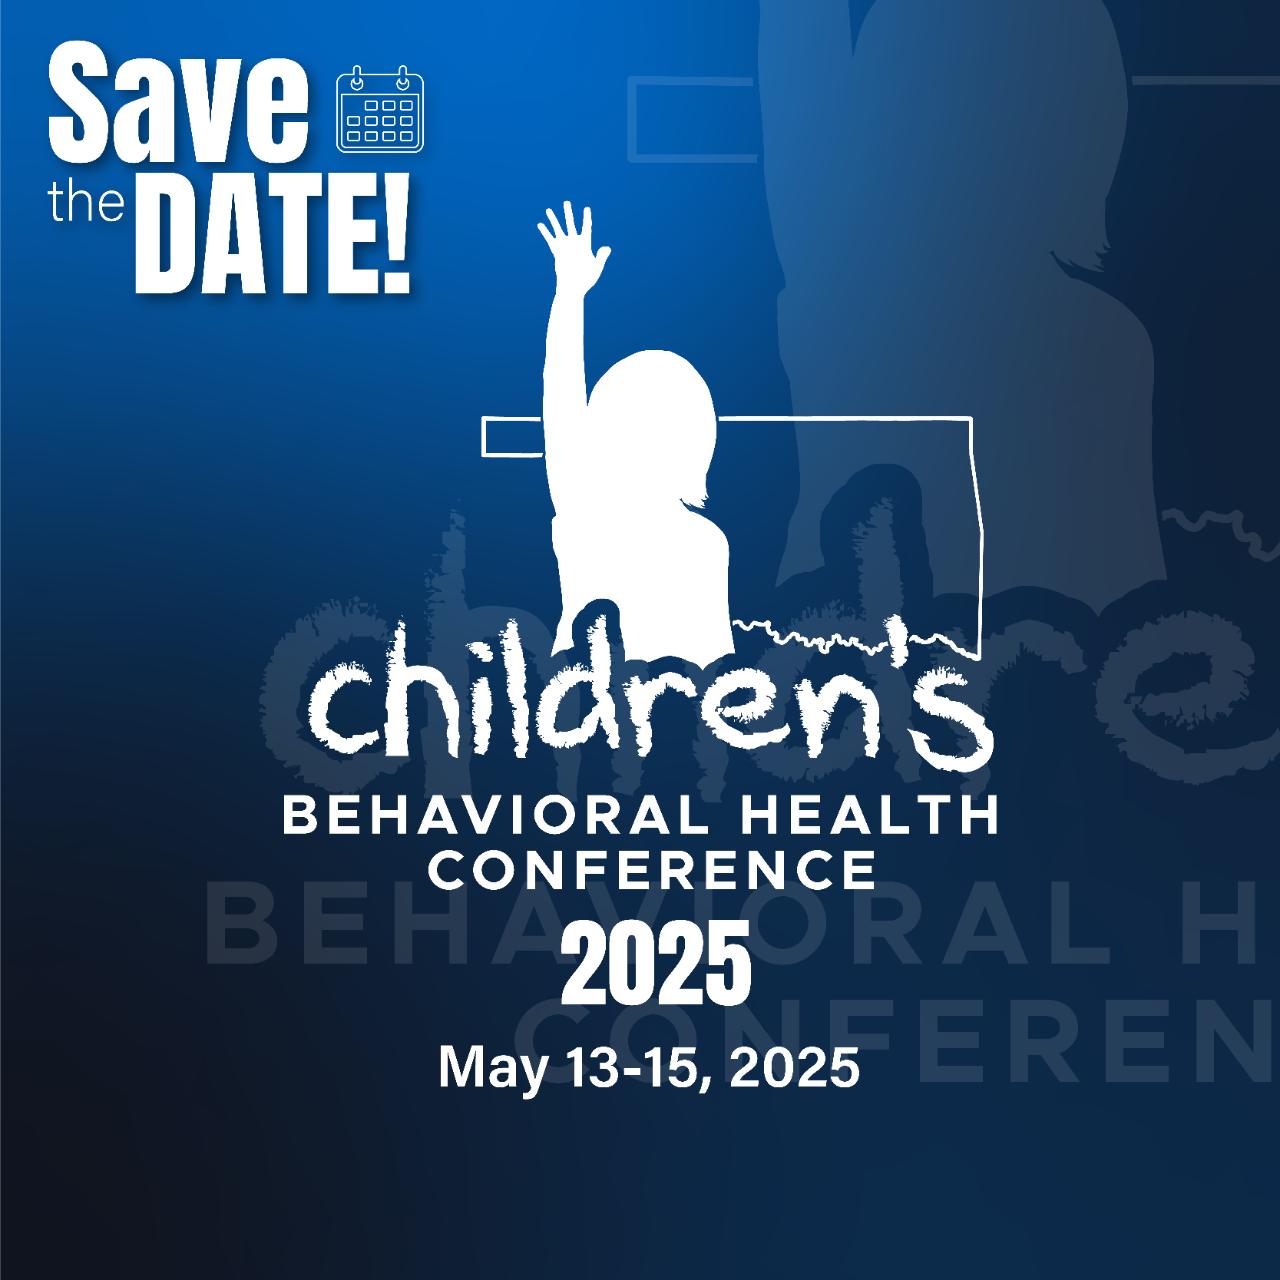 register for the children's behavioral health conference